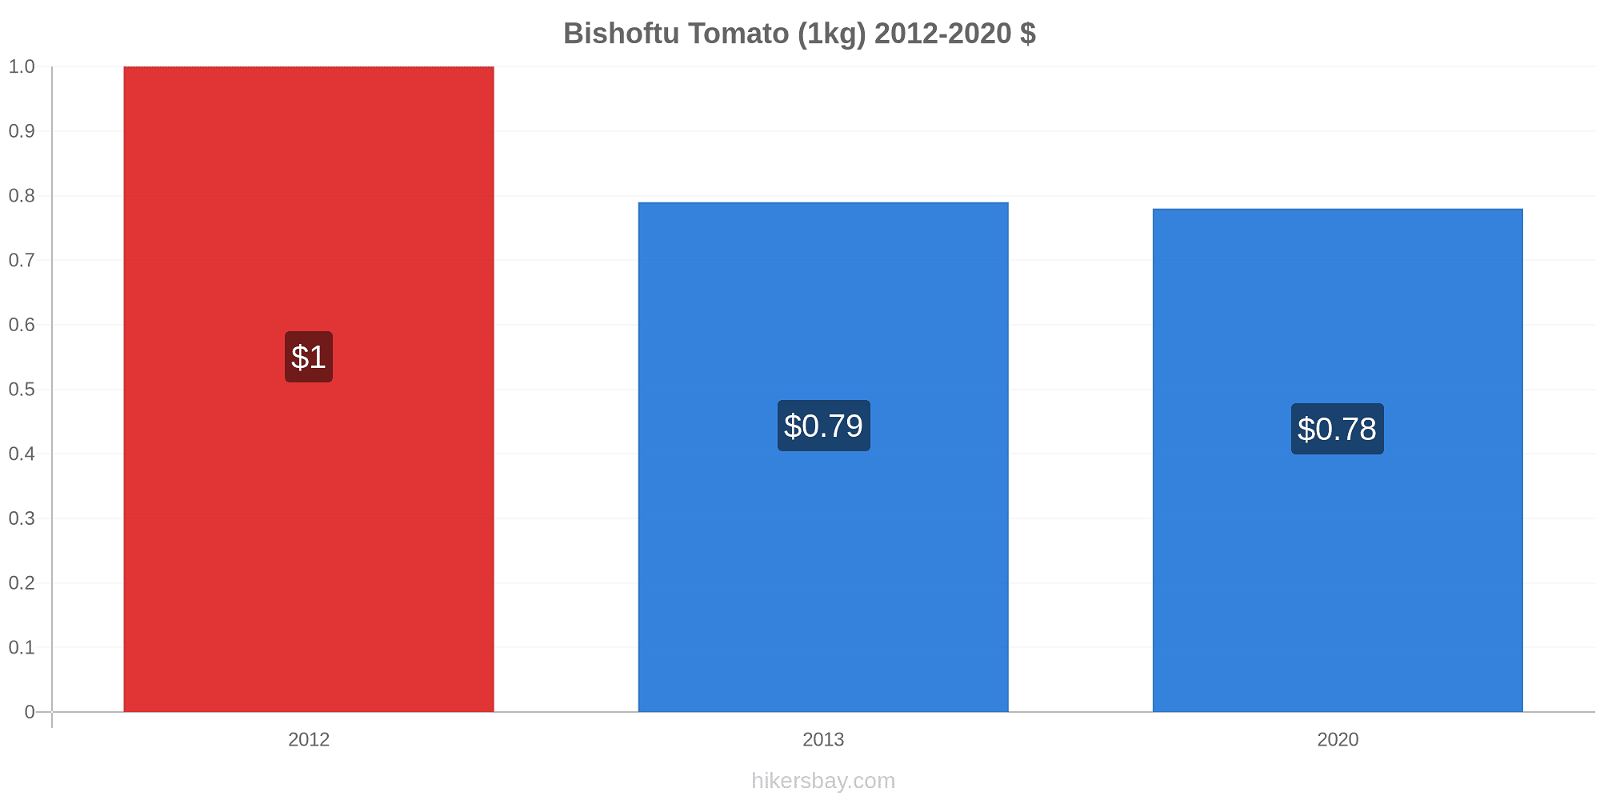 Bishoftu price changes Tomato (1kg) hikersbay.com